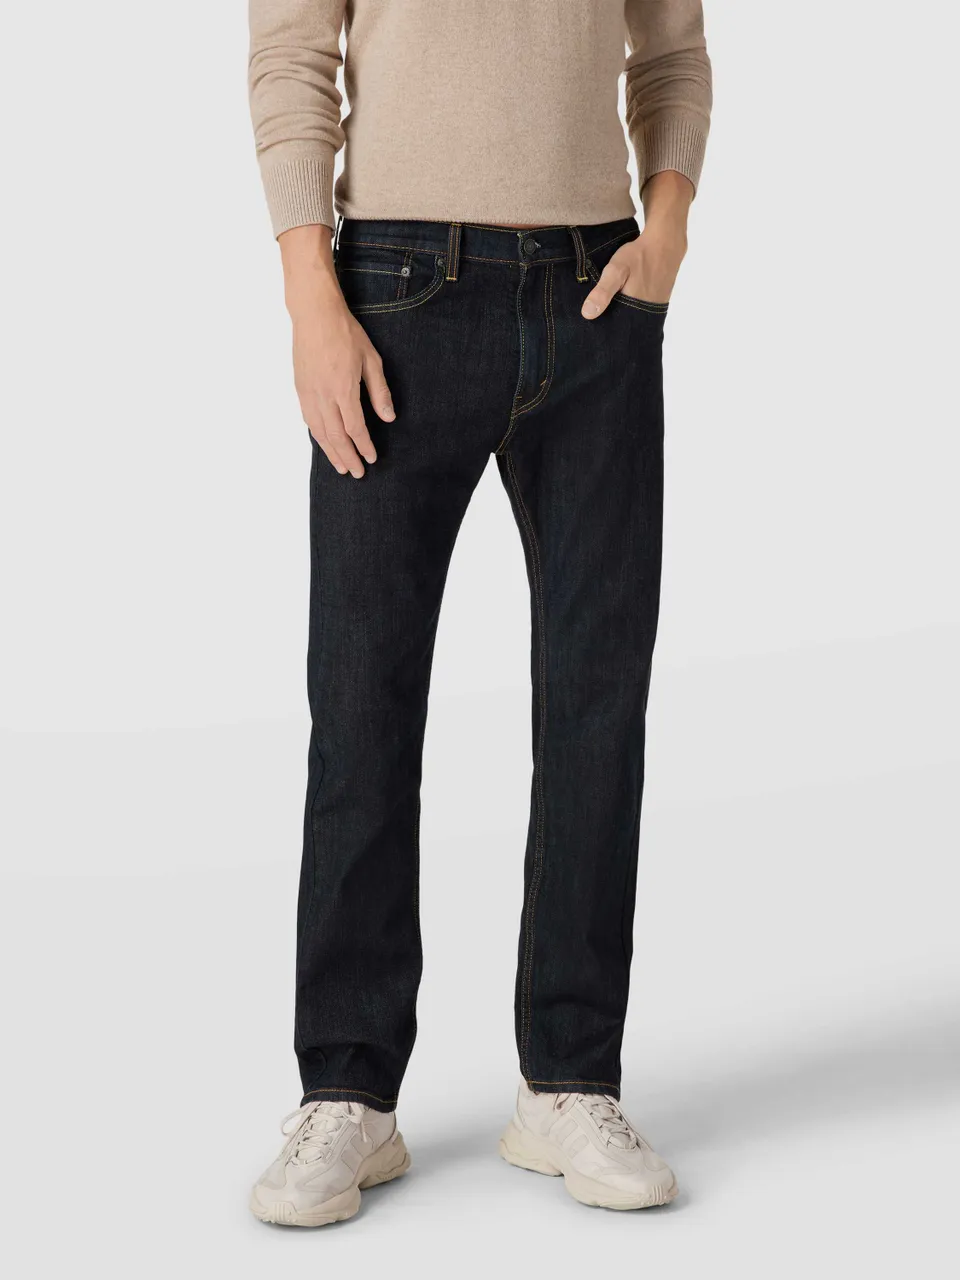 Jeans mit Kontrastnähten Modell 'DARK RINSE'